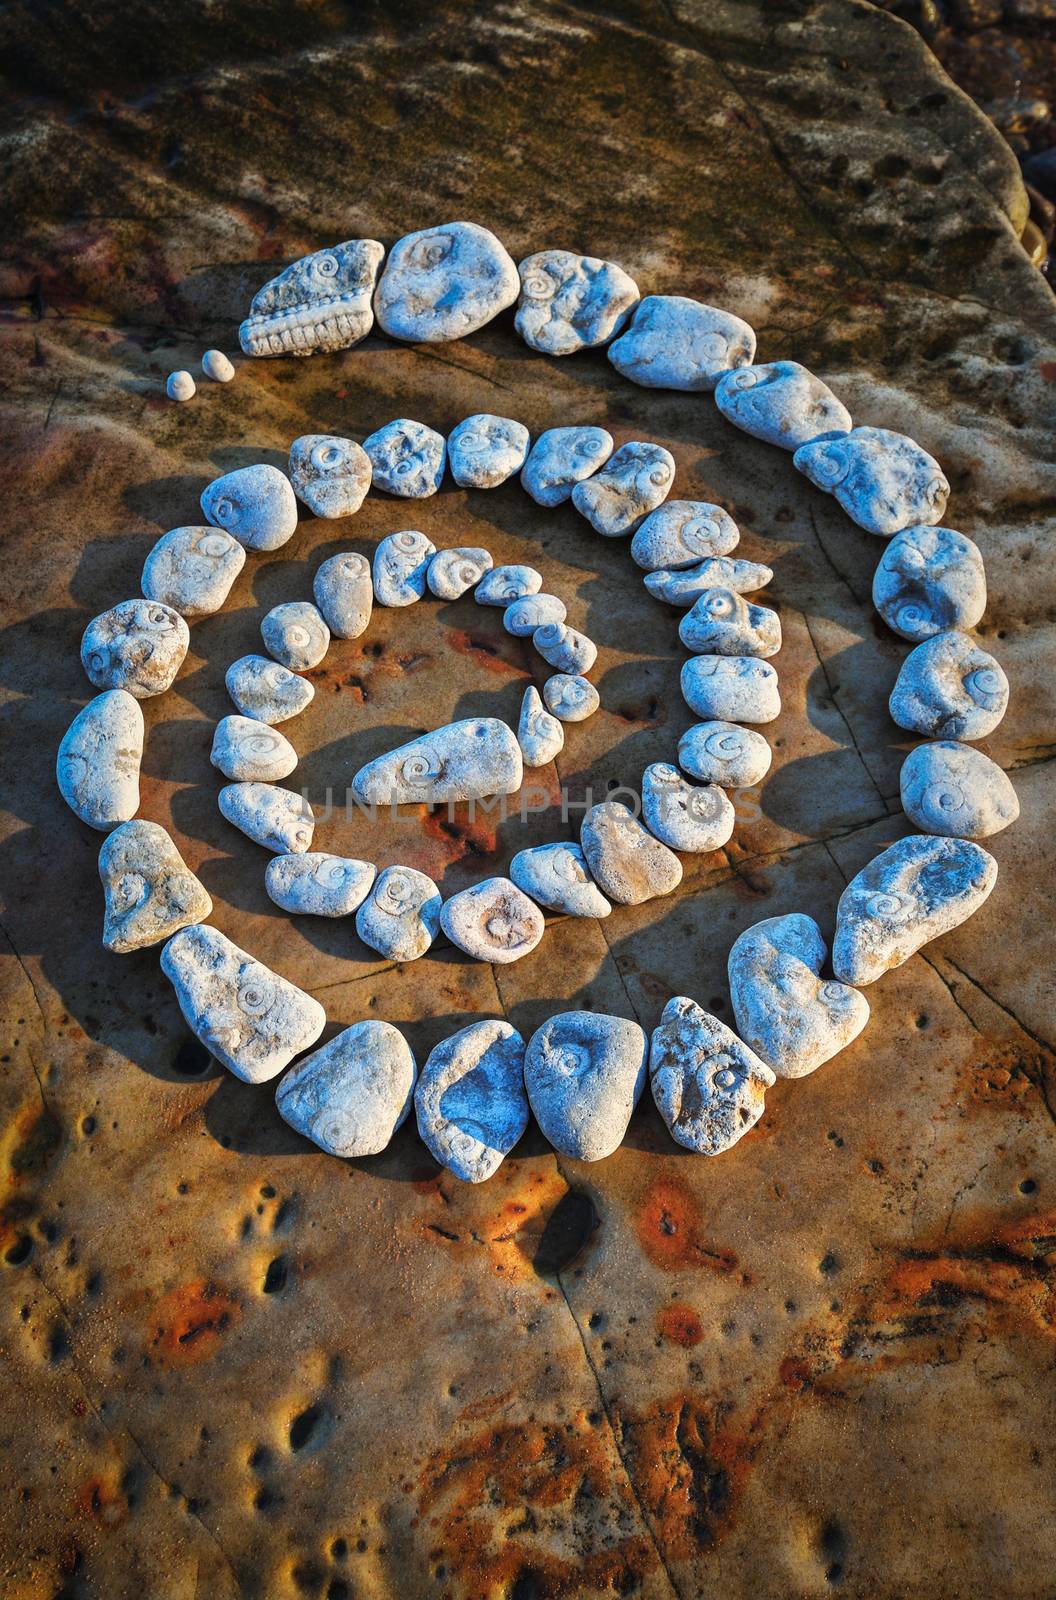 Stones Spiral by styf22